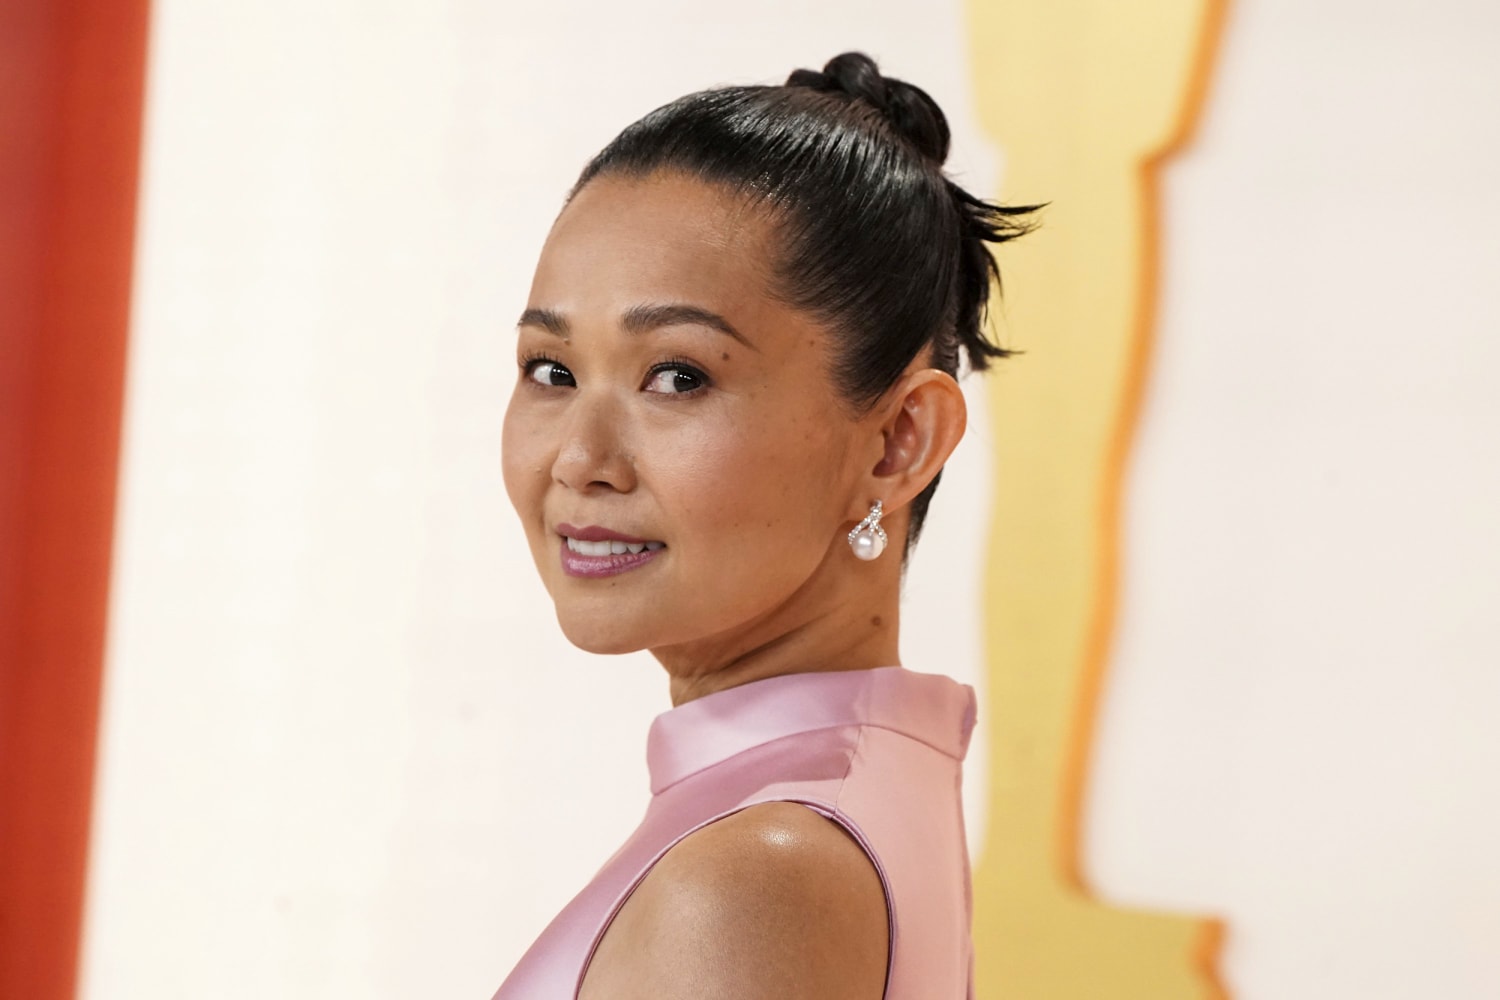 Hong Chau wore dress honoring her Vietnamese heritage to Oscars